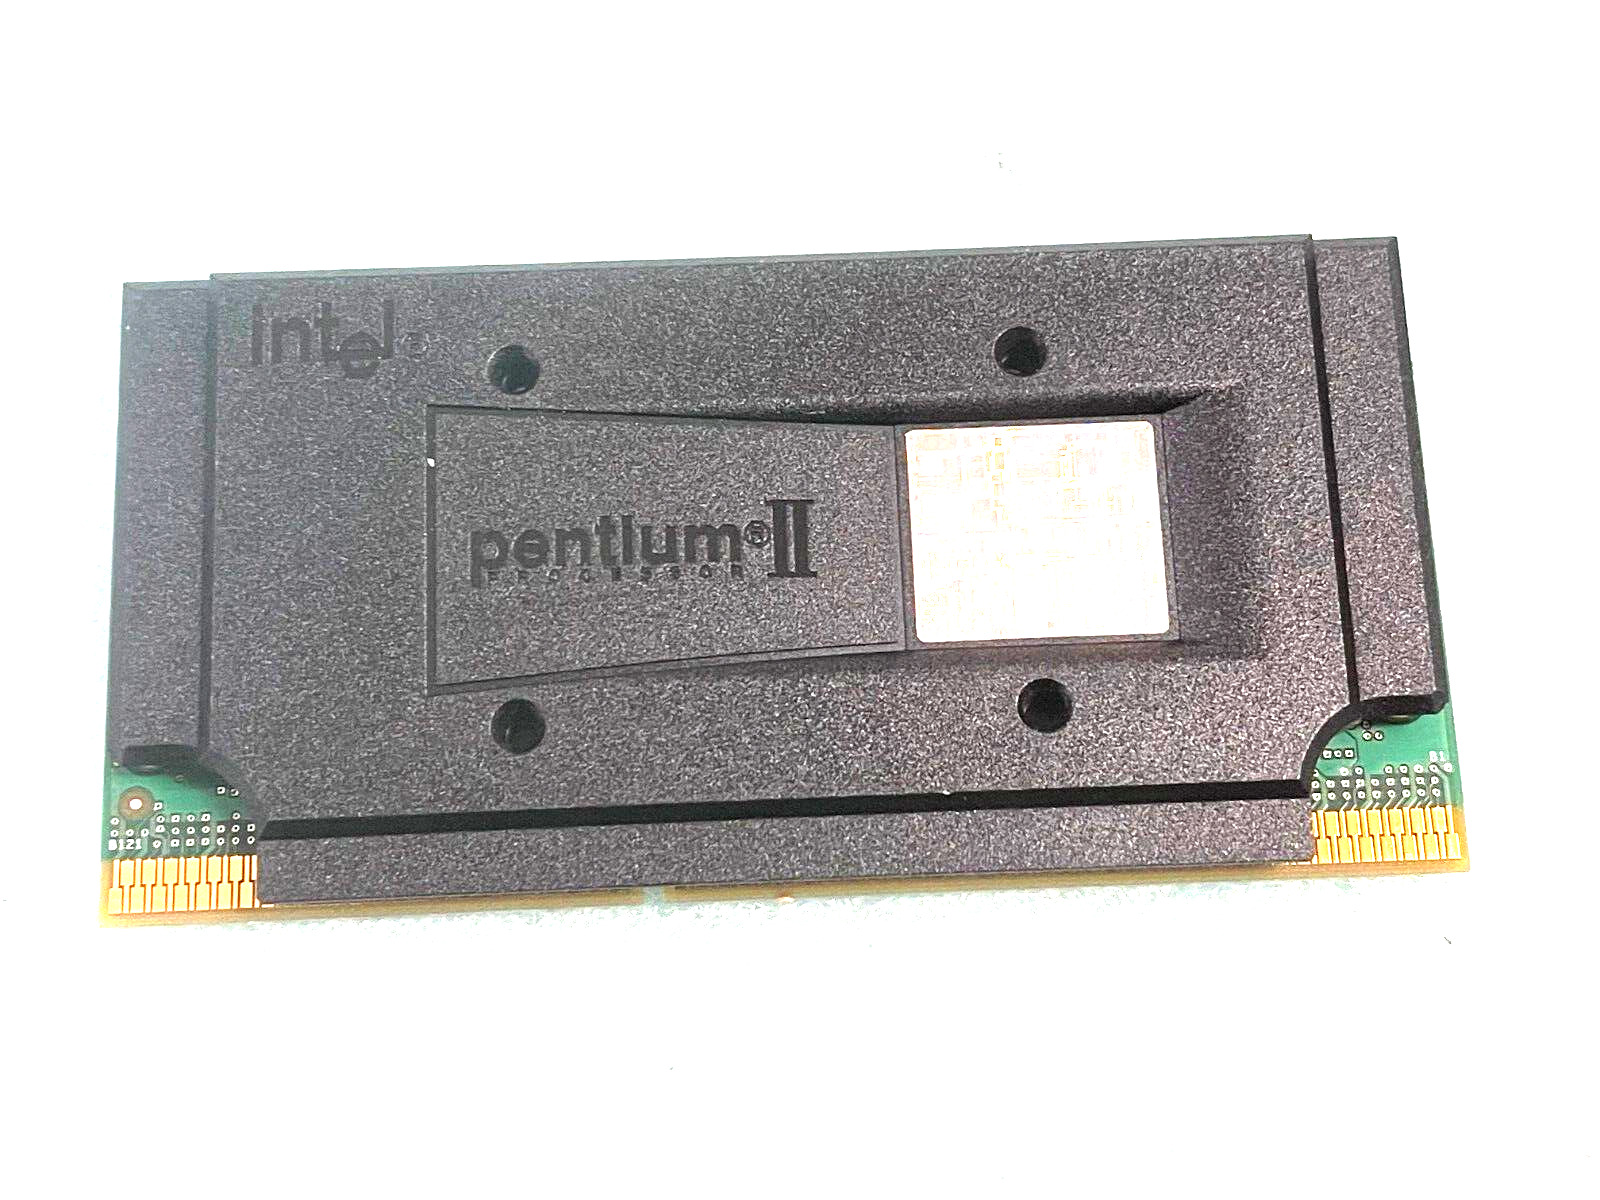 VINTAGE INTEL PENTIUM II 400MHZ SLOT 1 CPU - TESTED CORPORATE PULLS RM2-CMP44